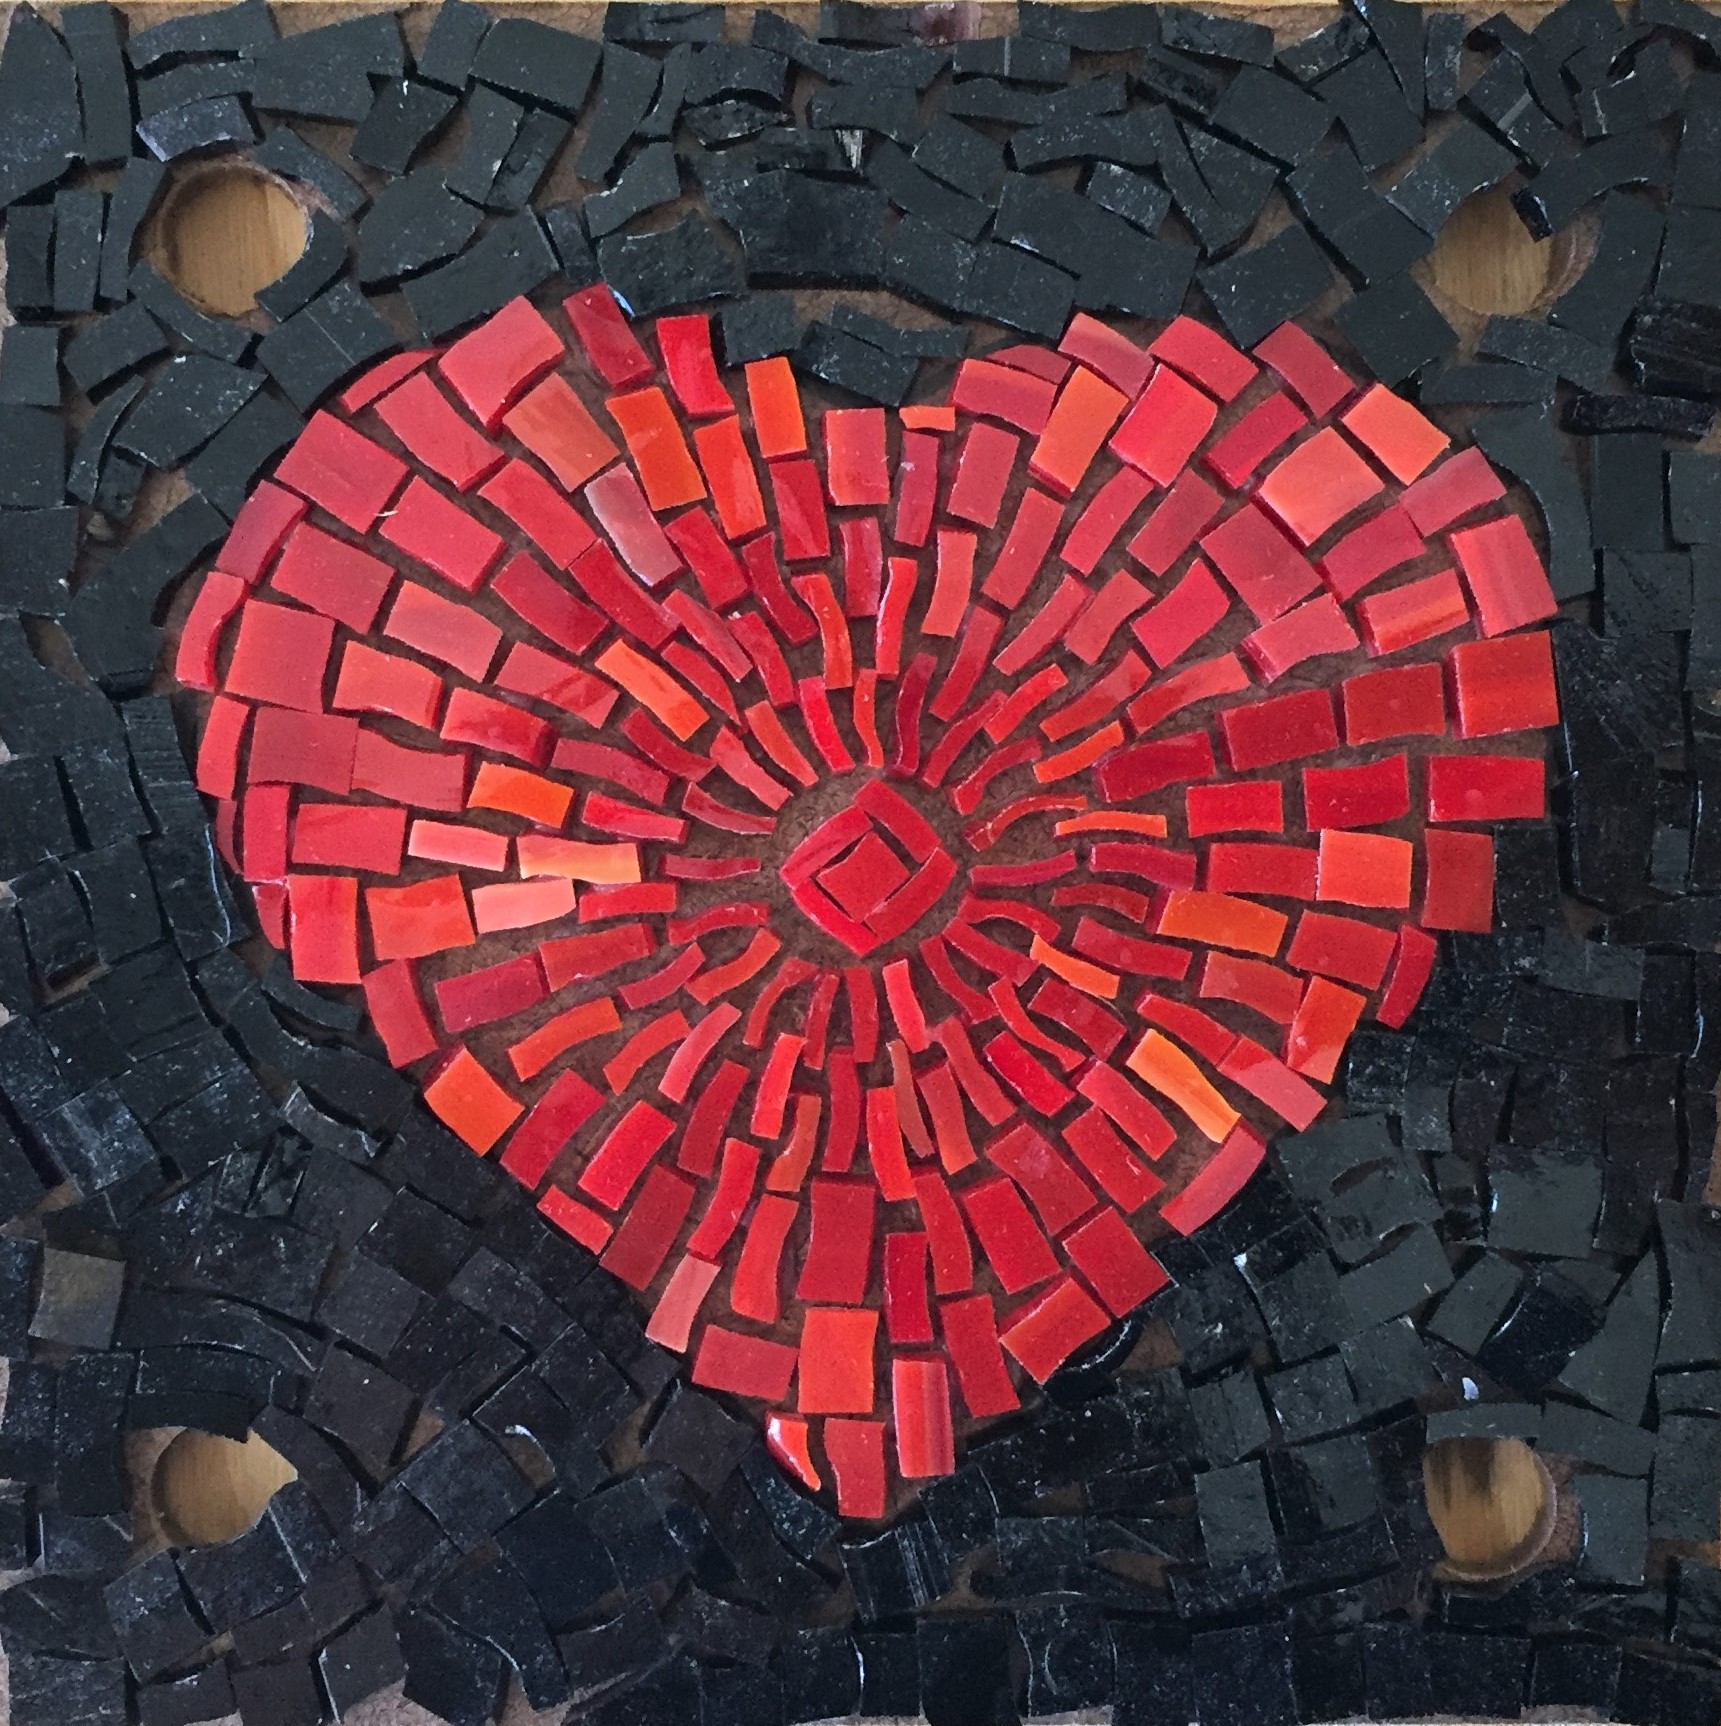 Heart Mosaic